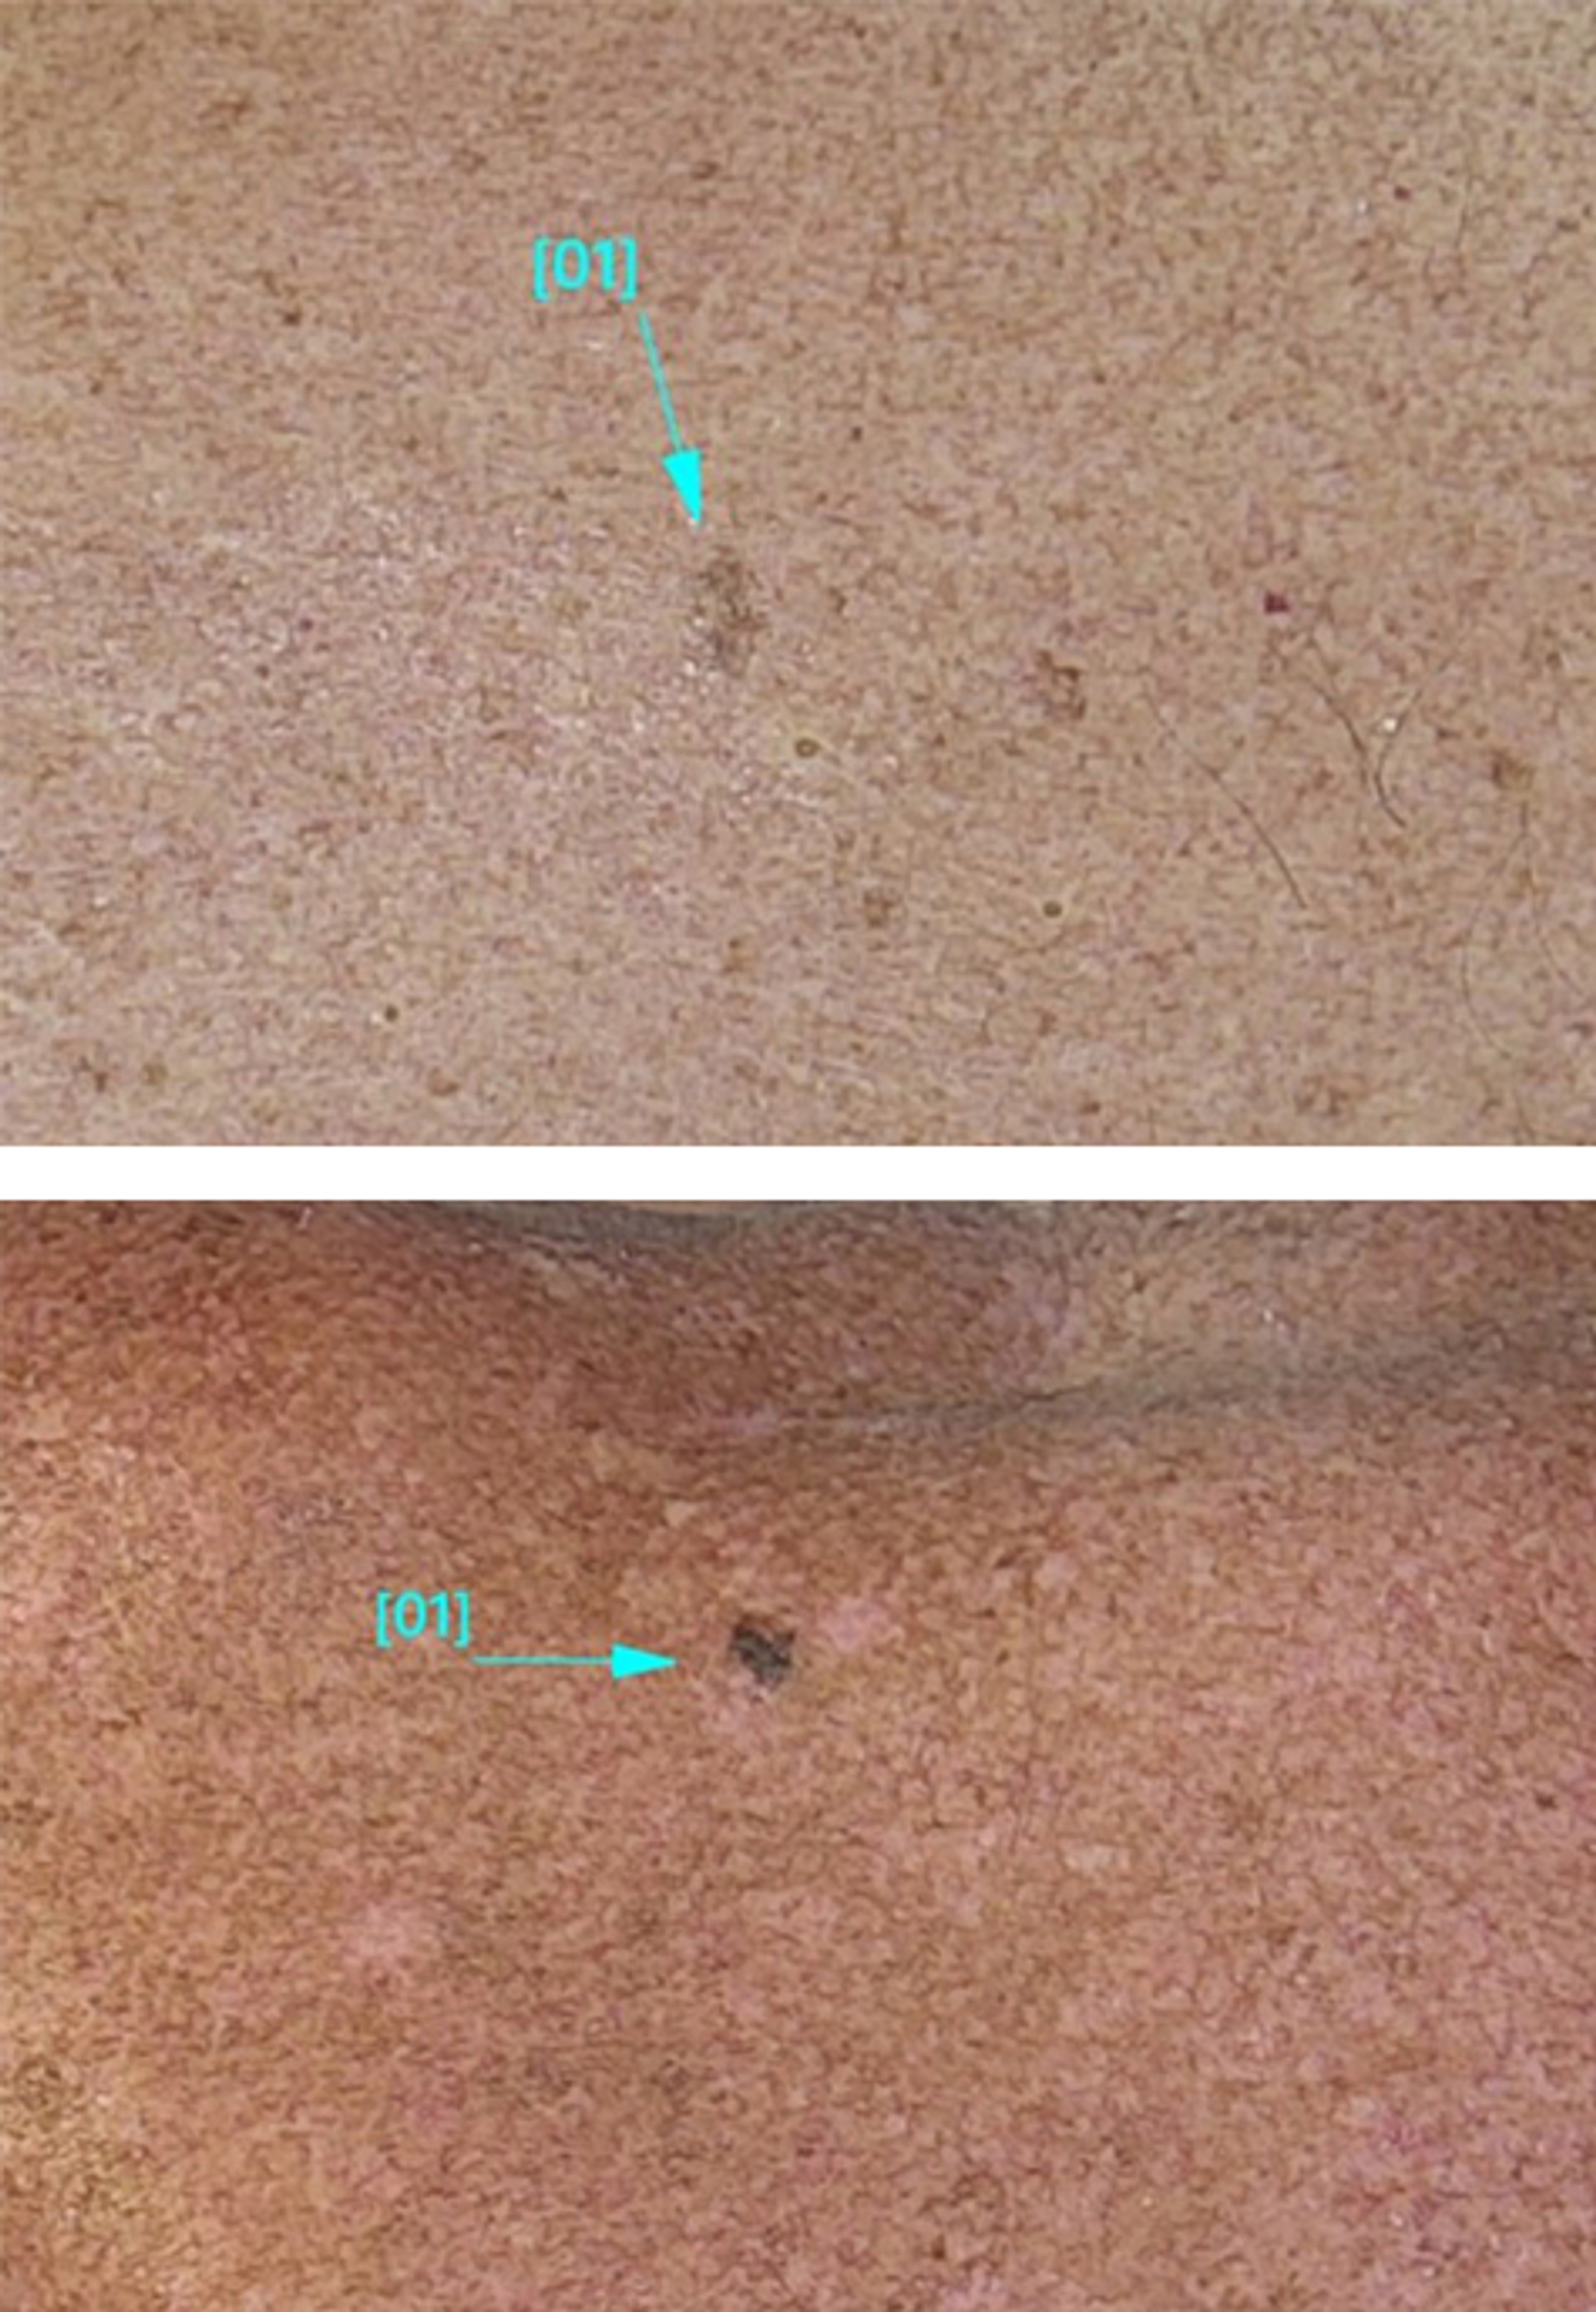 Malignant melanomas on back and trapezius of 2 patients